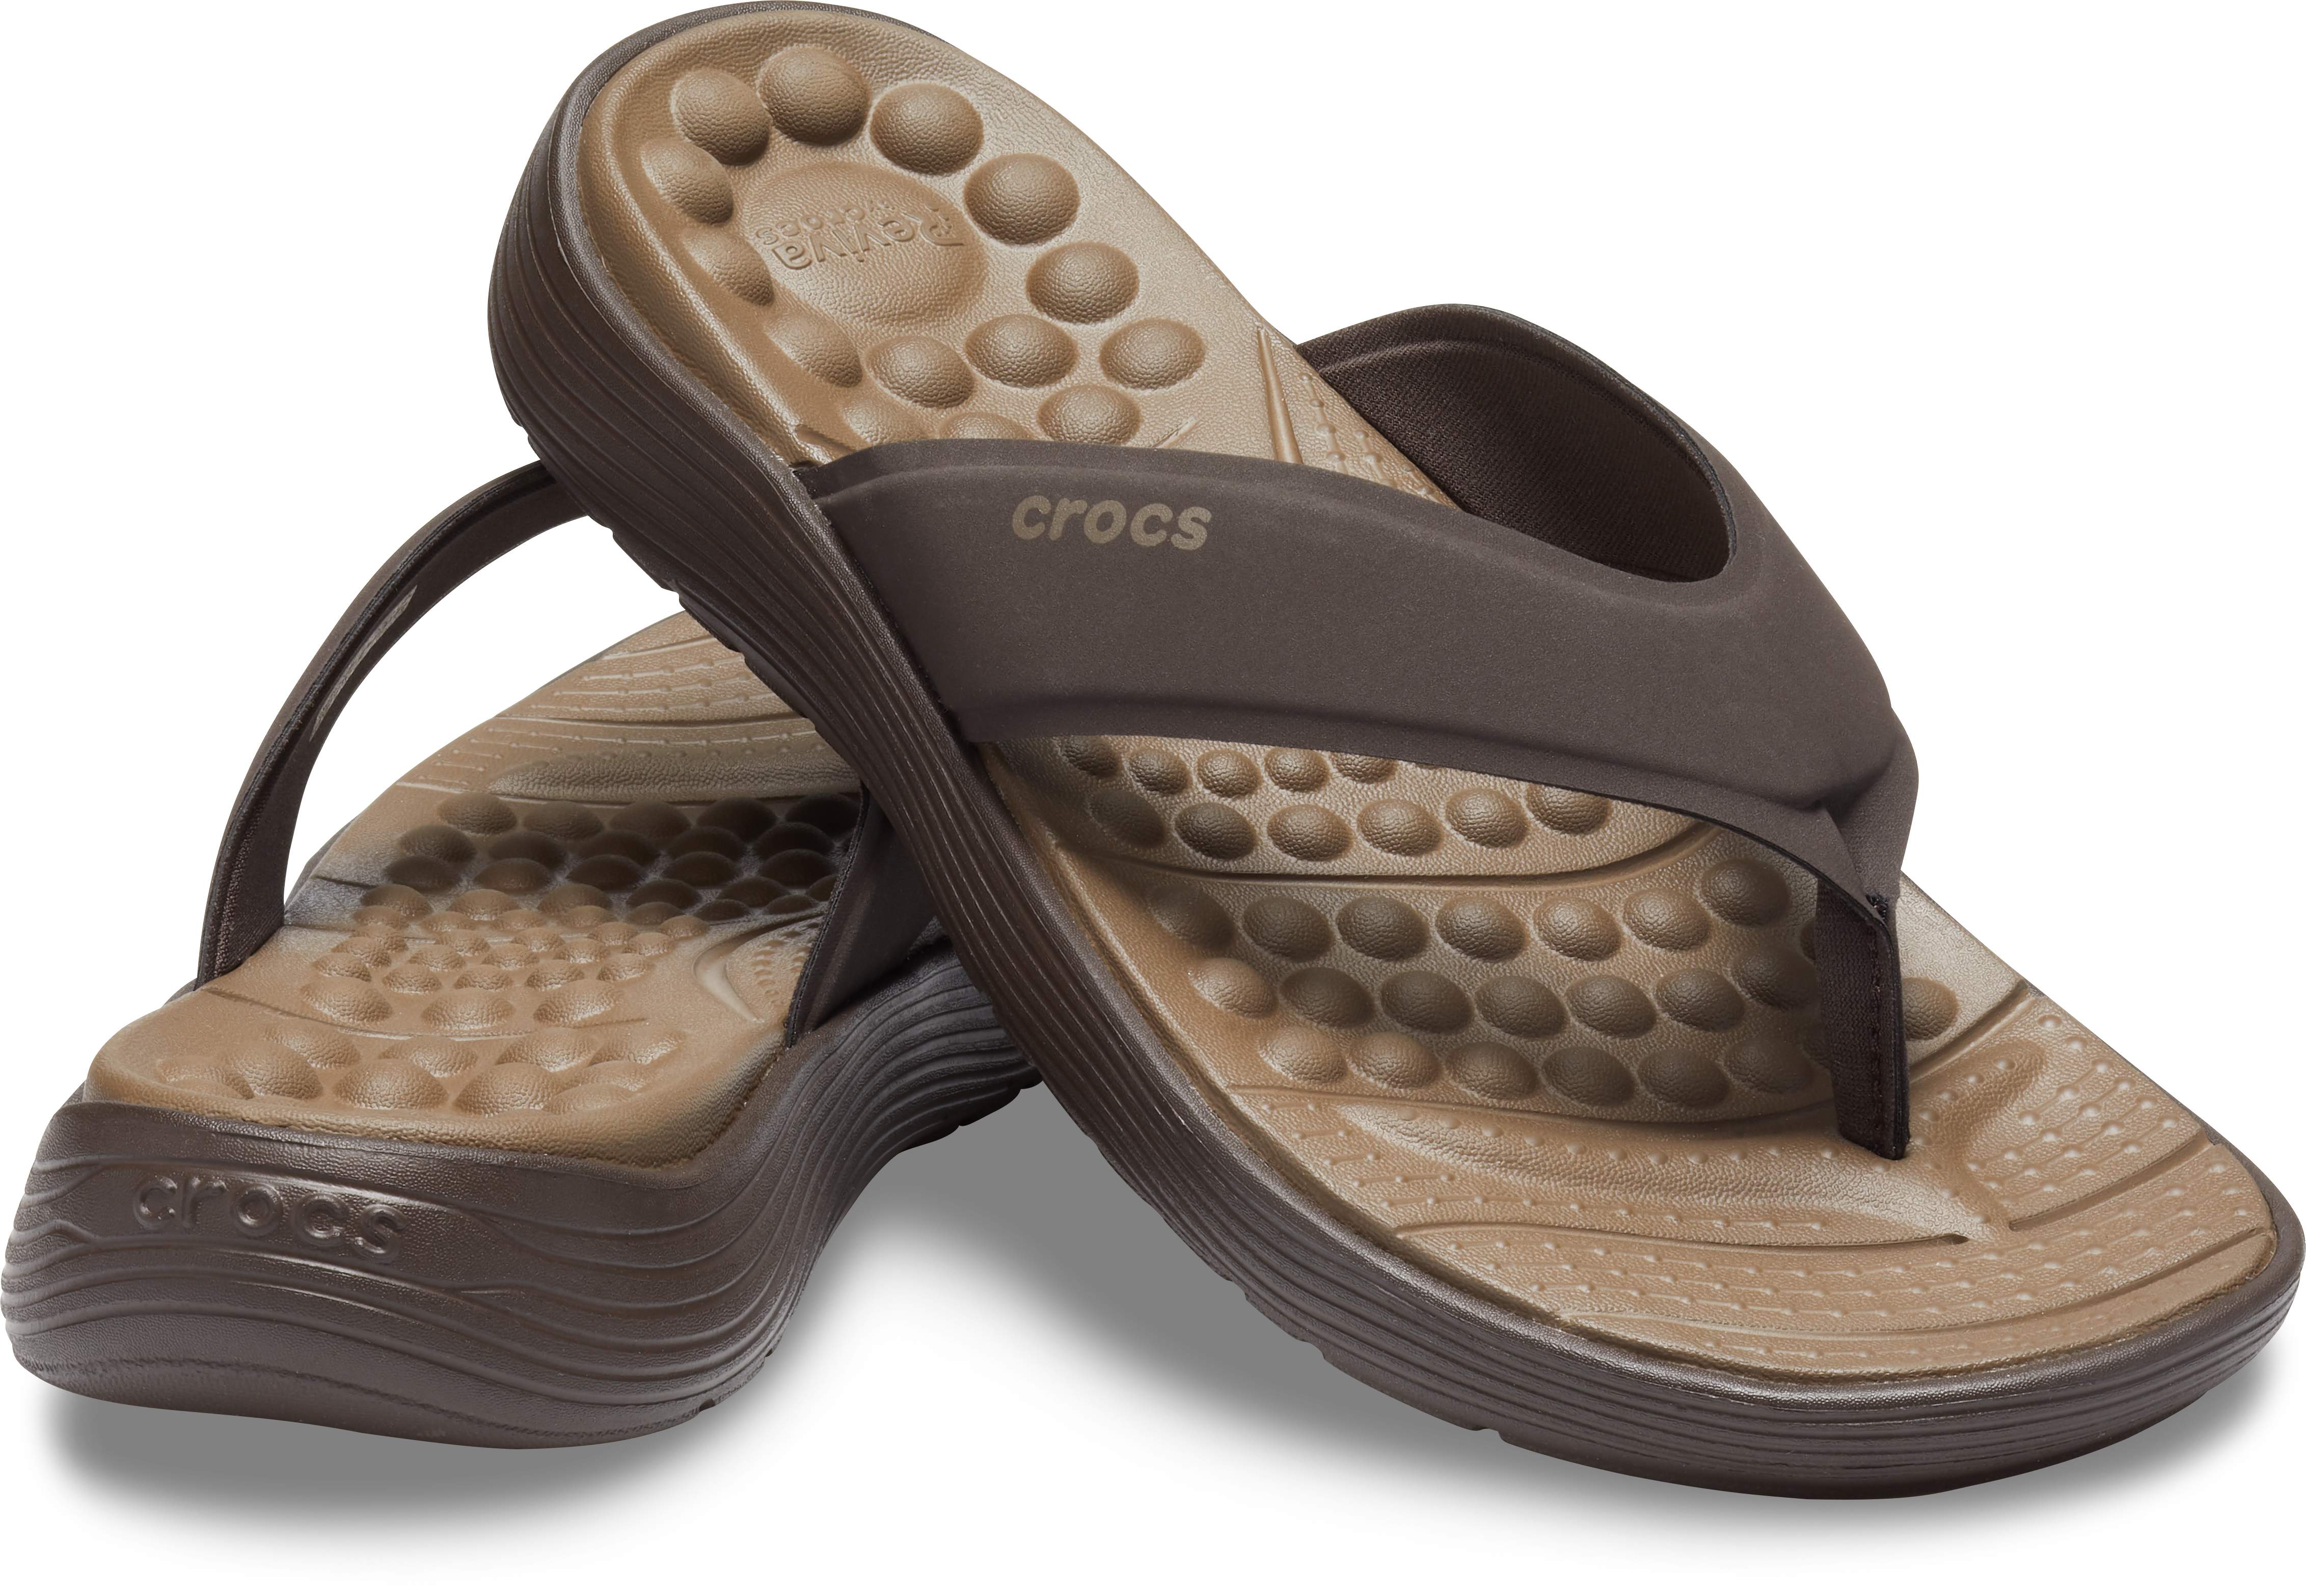 crocs reviva slide review